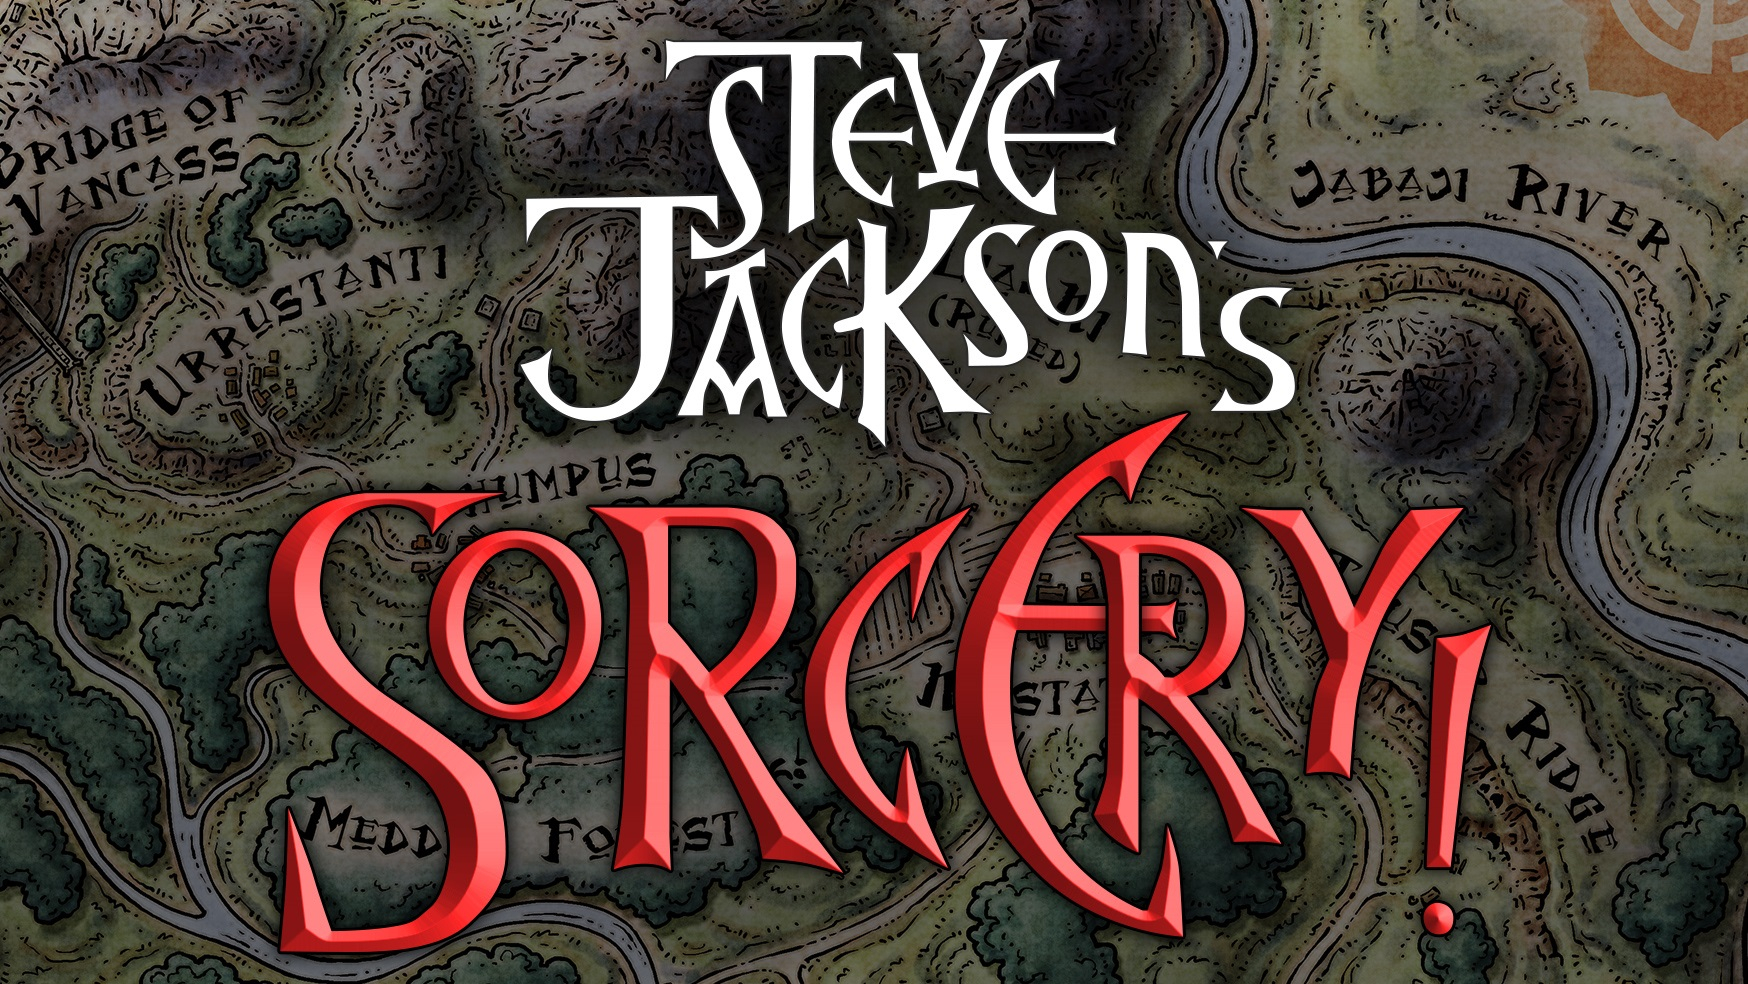   Steve Jackson's Sorcery!   Heavens Vault     